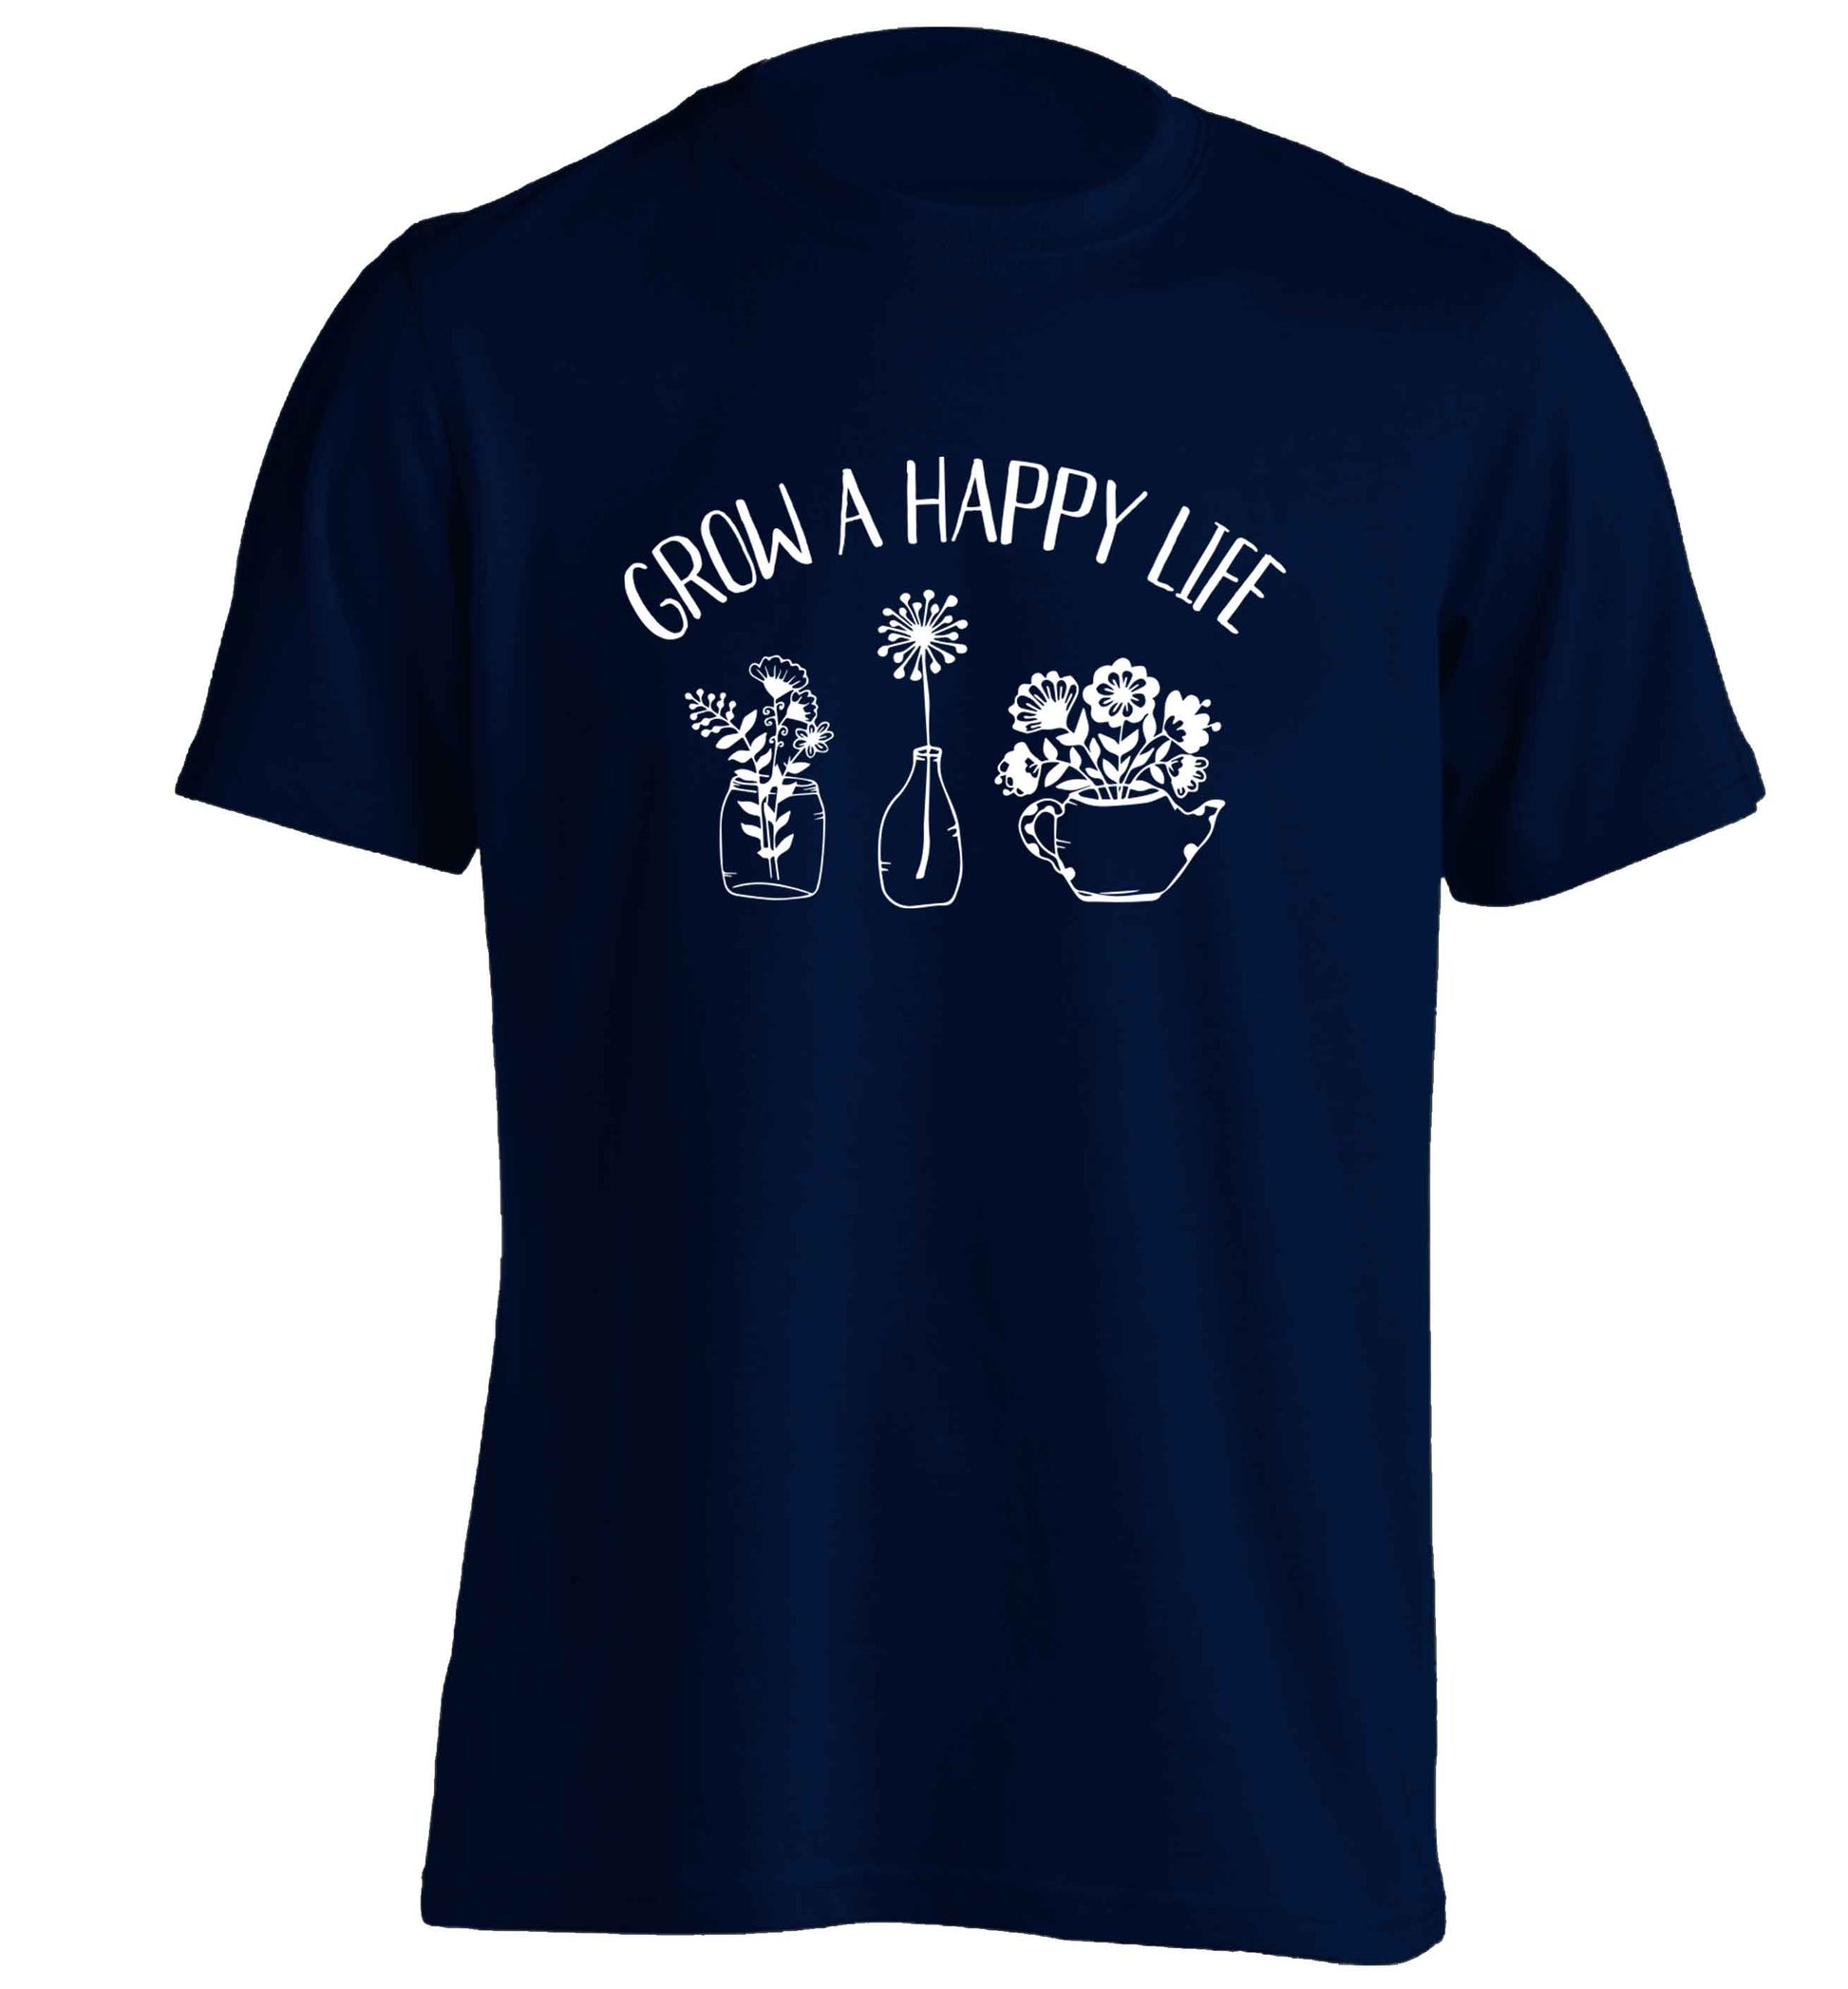 Grow a happy life adults unisex navy Tshirt 2XL